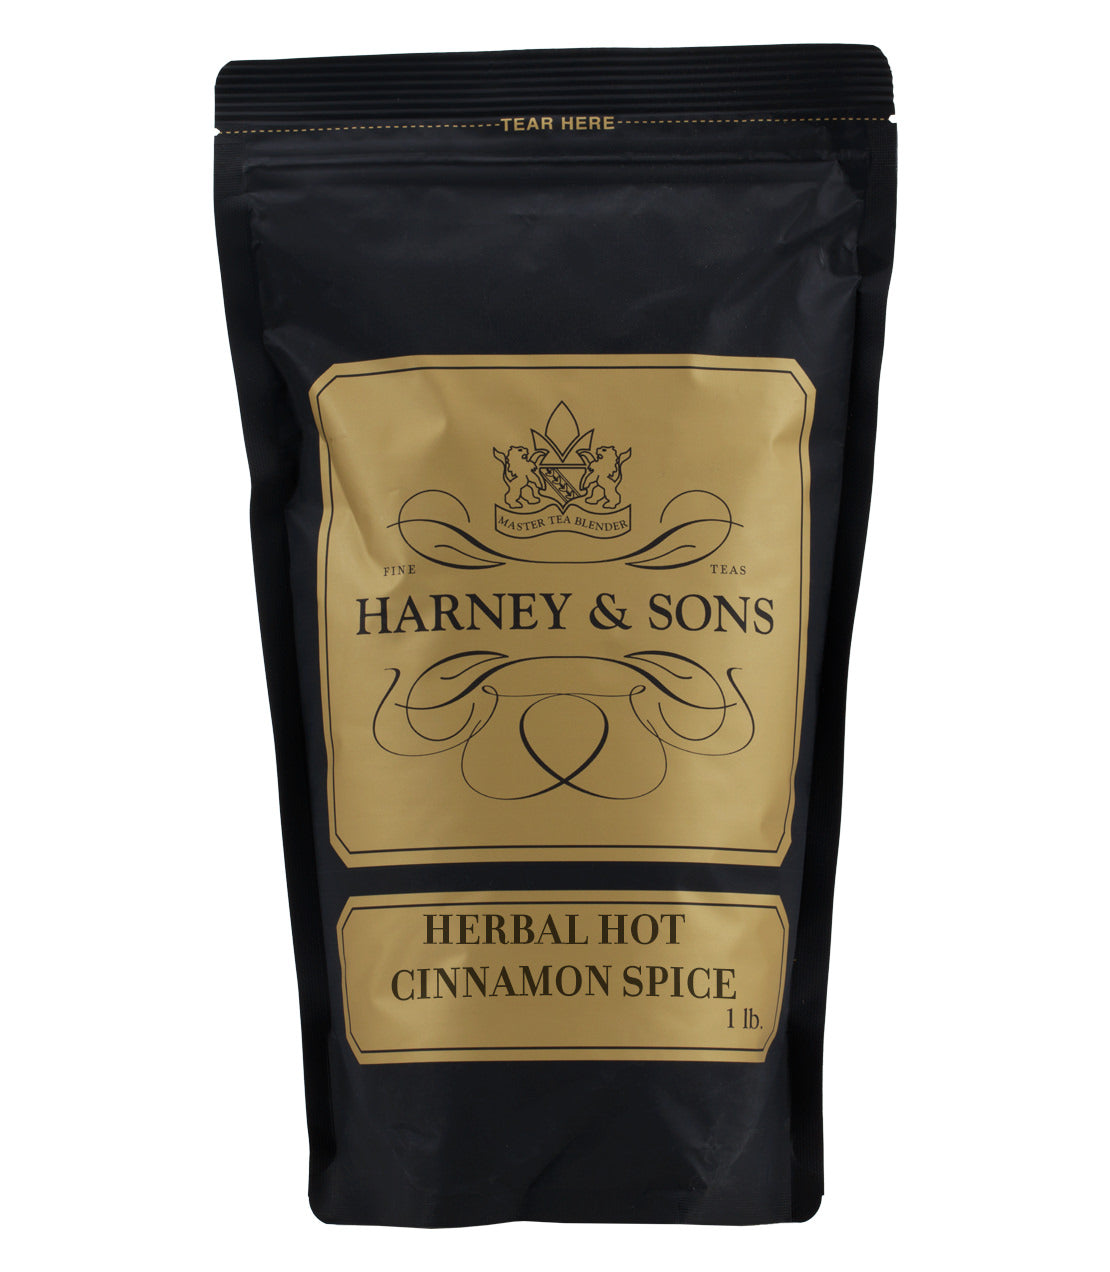 Herbal Hot Cinnamon Spice - Loose 1 lb. Bag - Harney & Sons Fine Teas